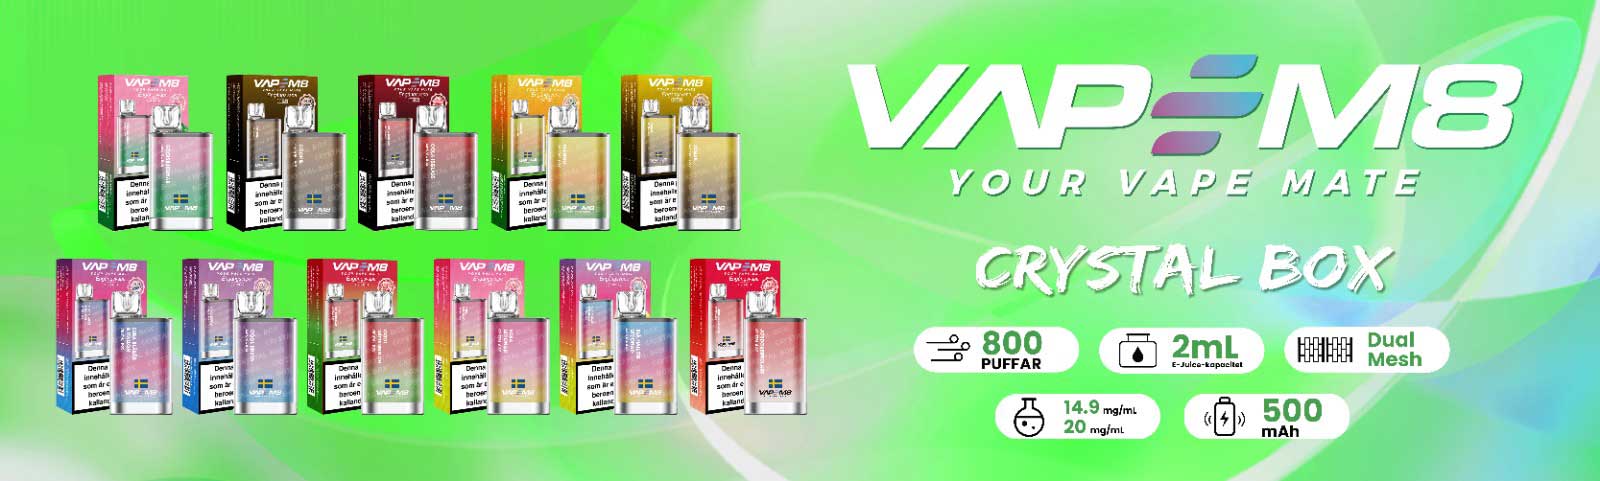 VapeM8-Crystal-Box-Banner-alla-smaker